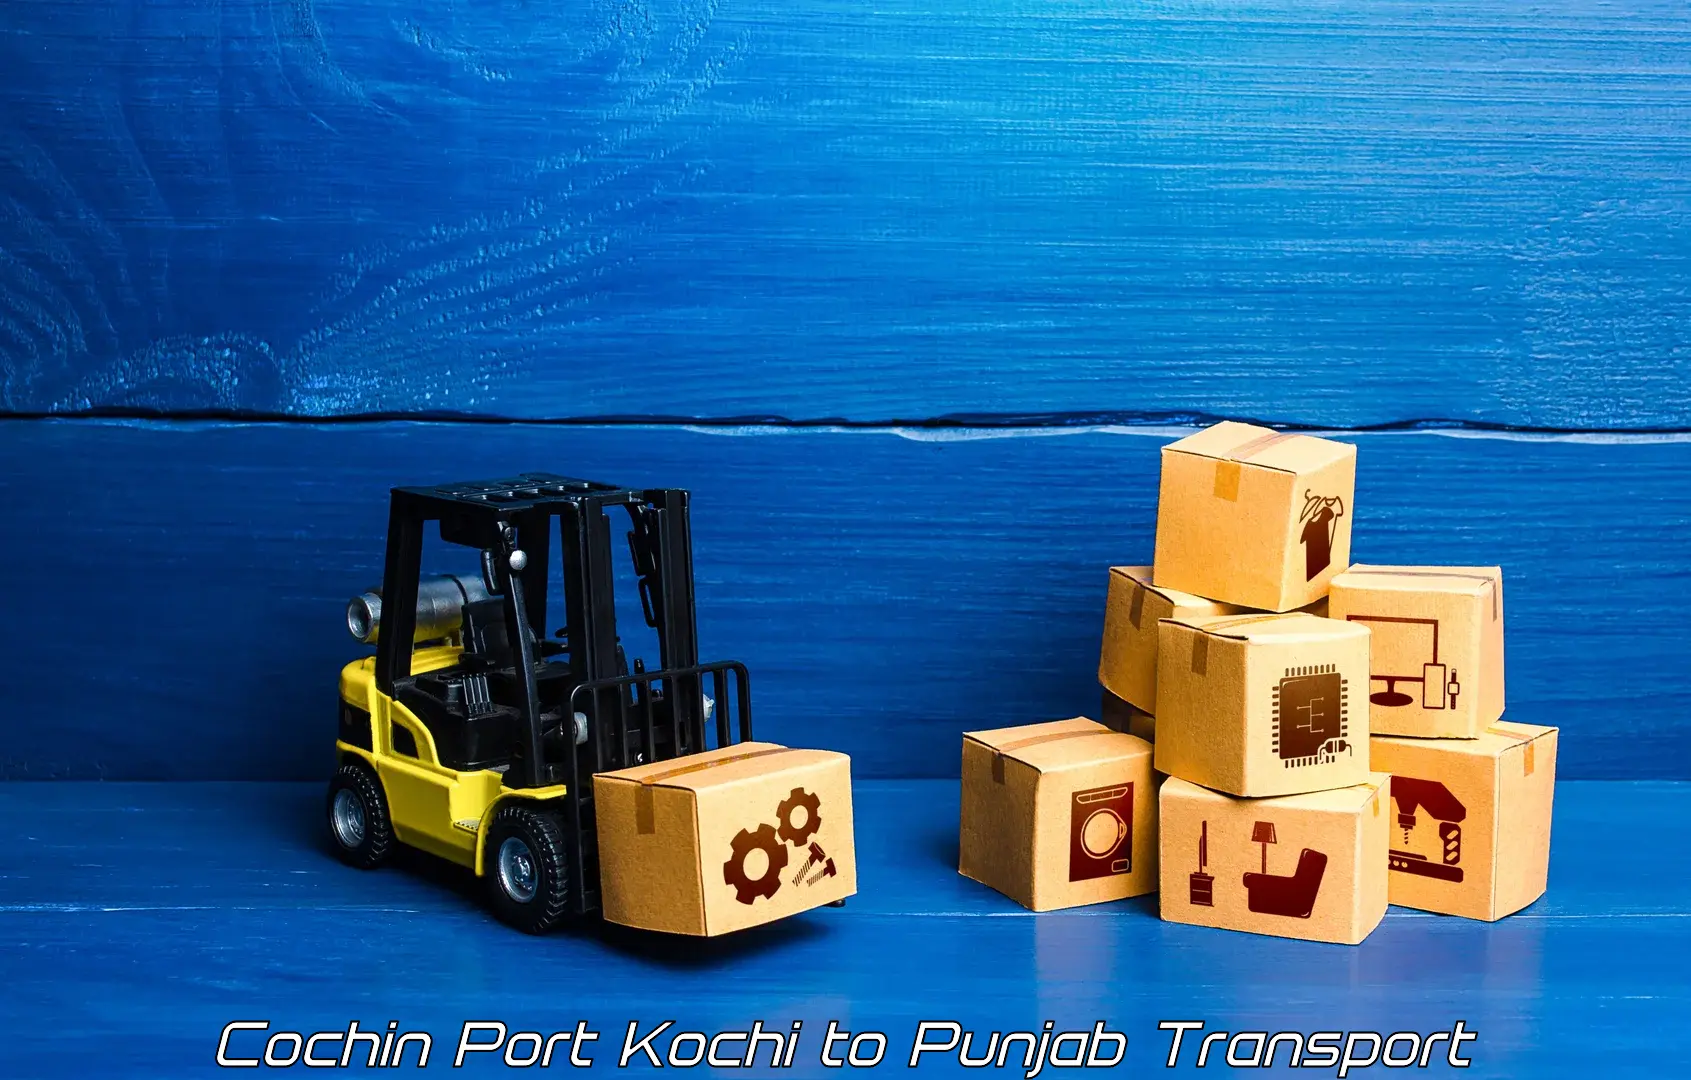 Cycle transportation service Cochin Port Kochi to Punjab